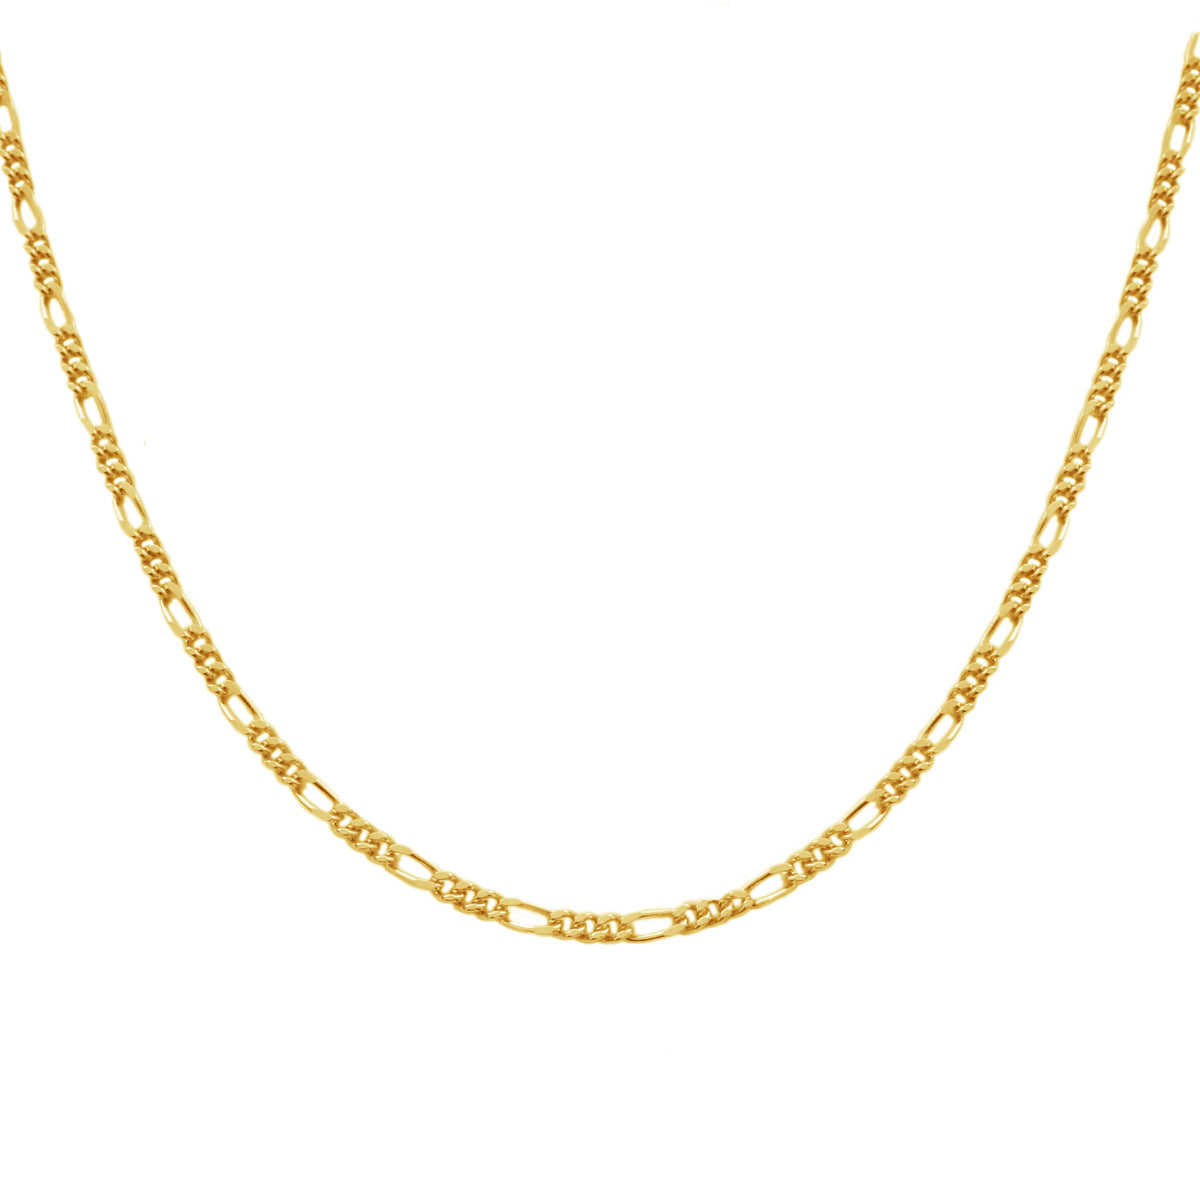 Chain gold - ByMirelae